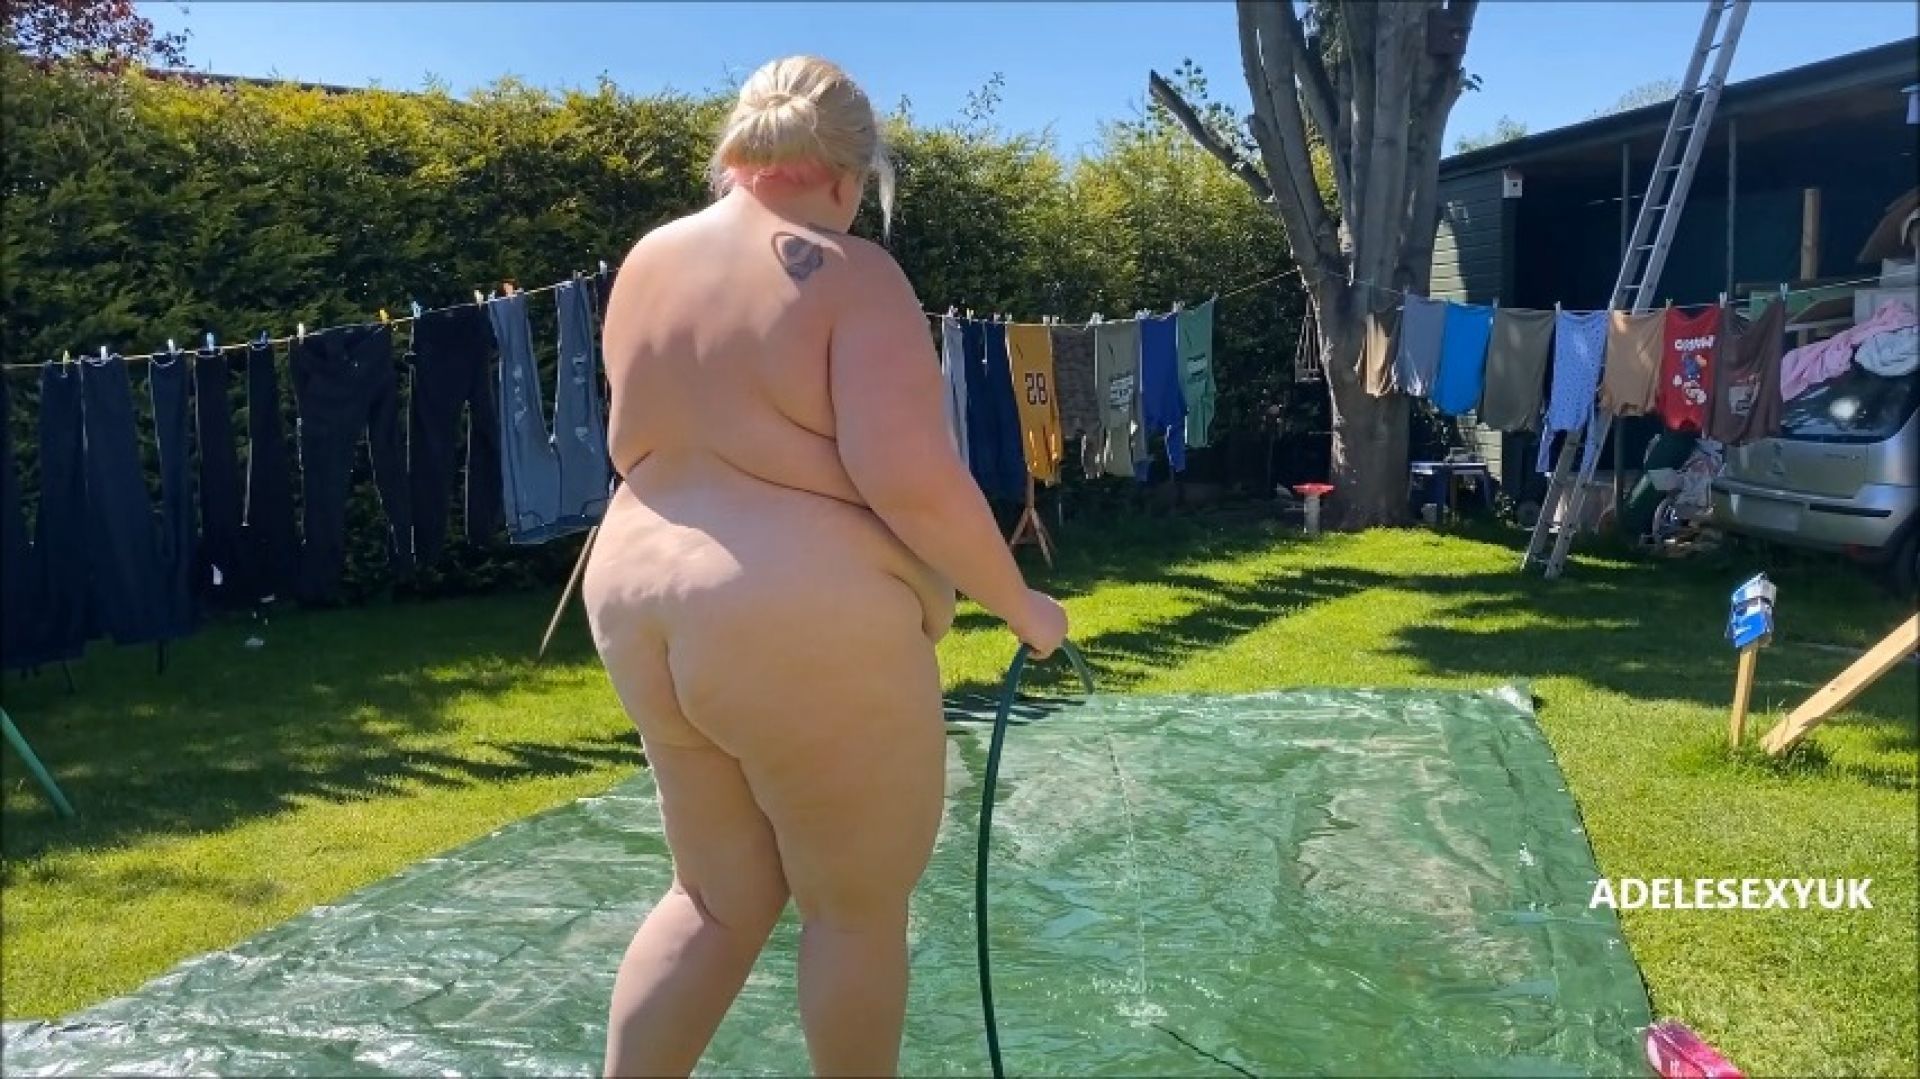 bbw adelesexyuk naked in her garden